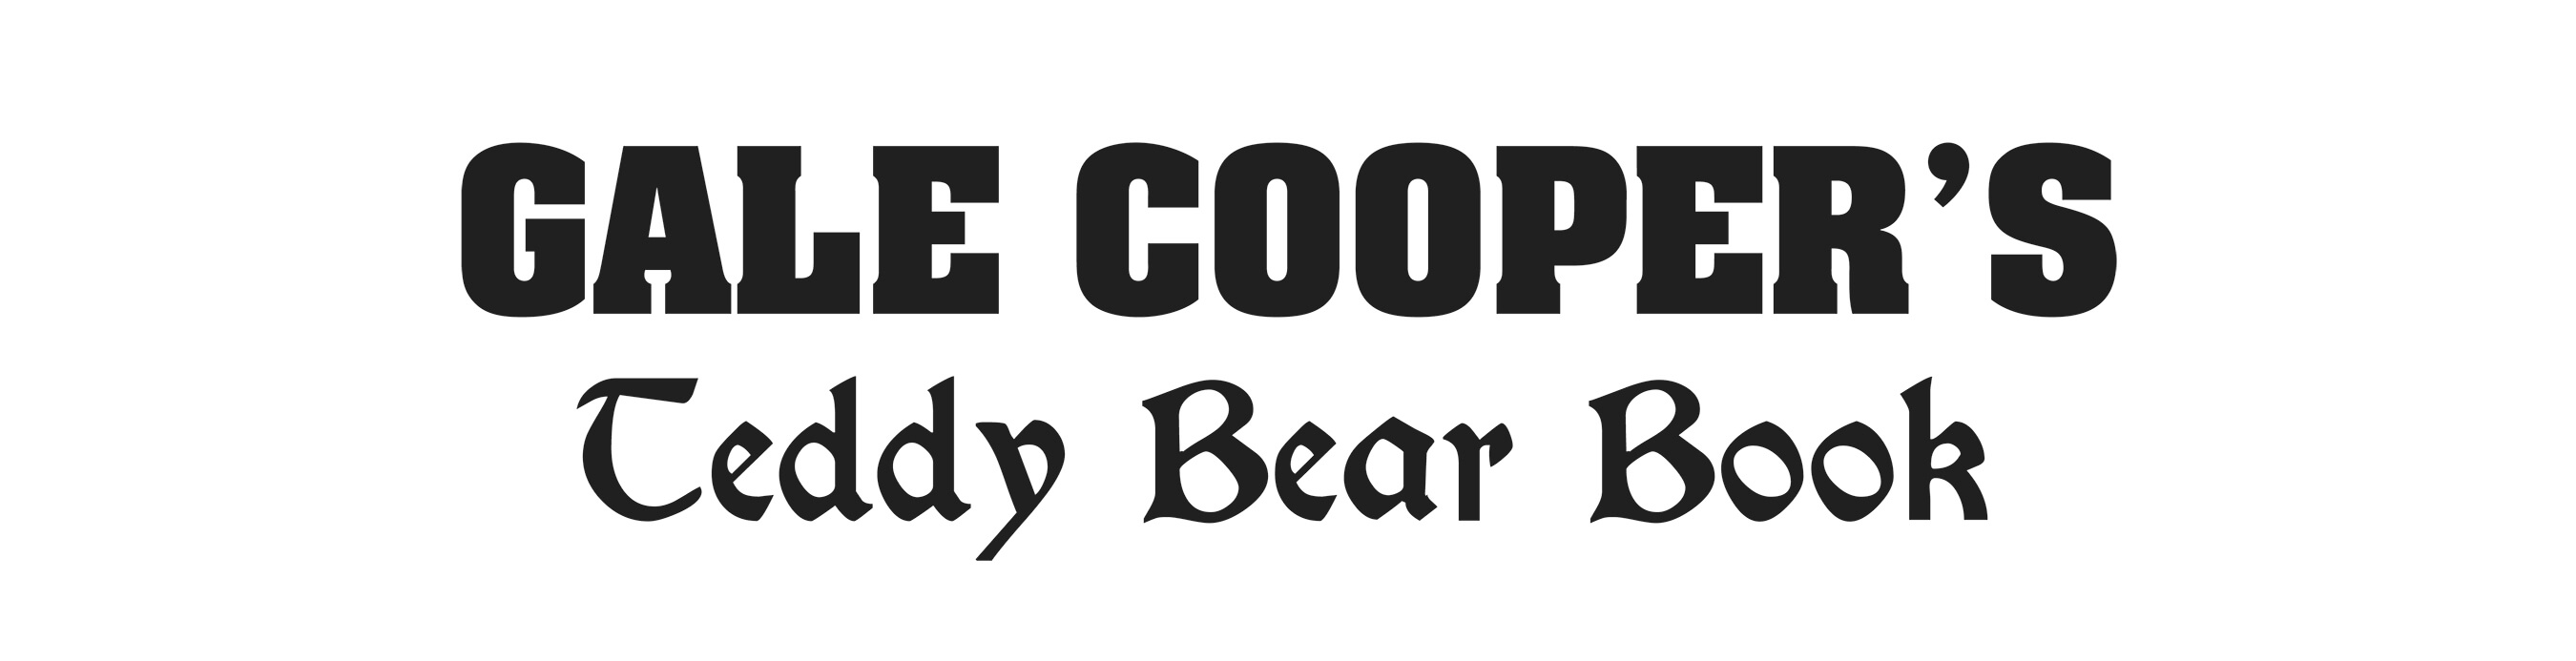 Gale Cooper's Teddy Bear Book